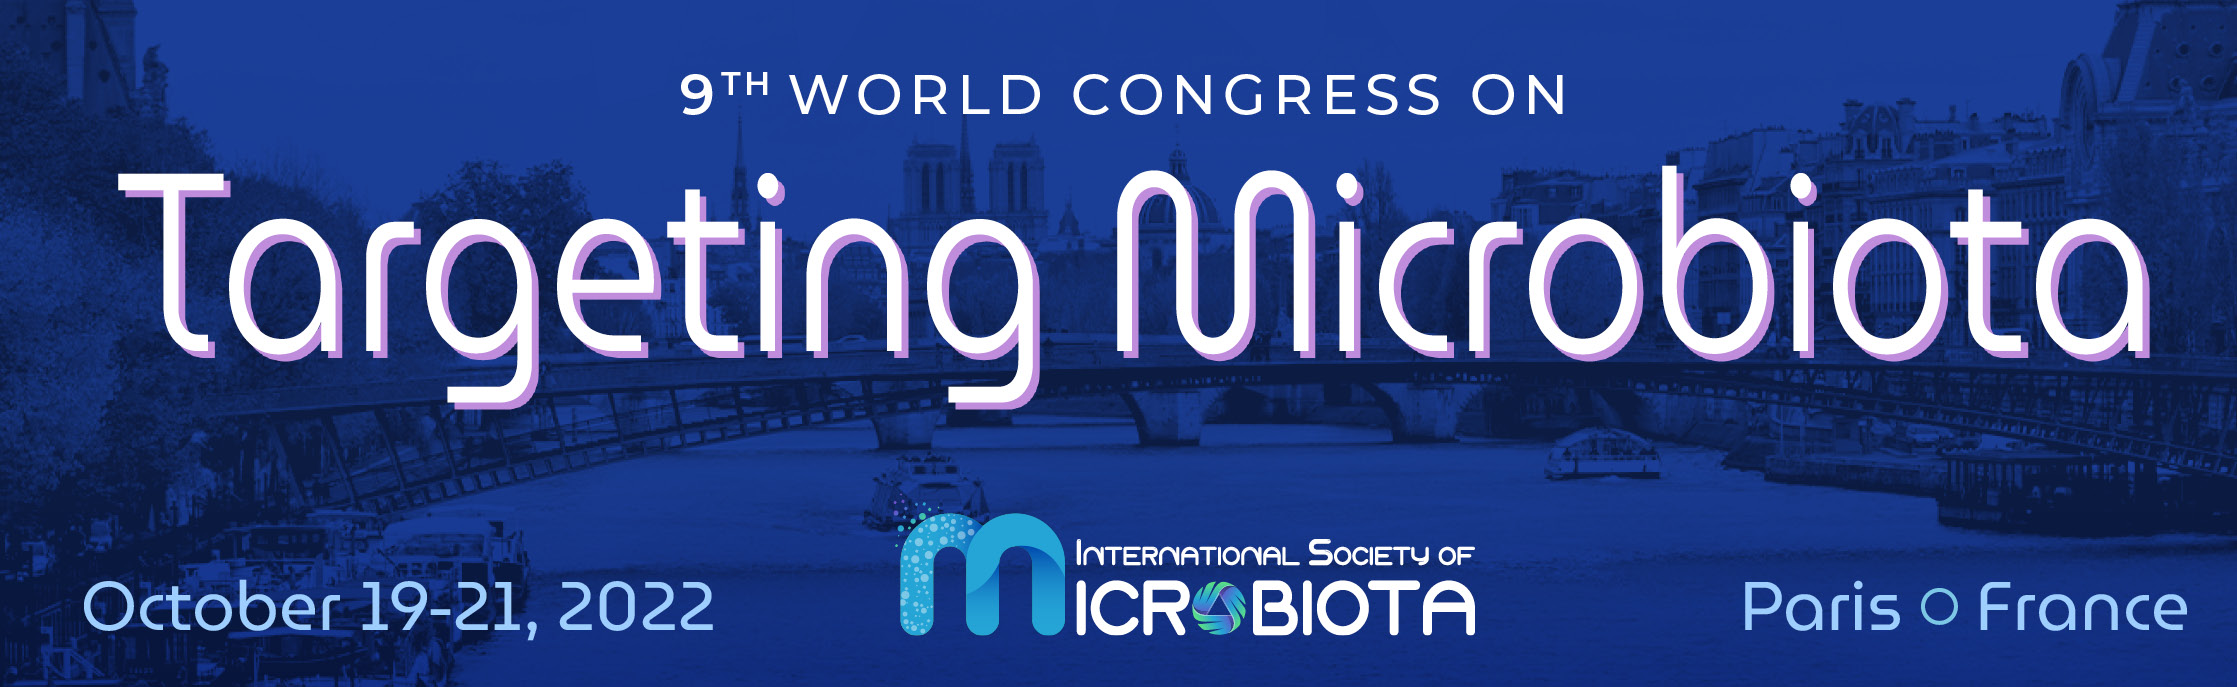 8th World Congress on Targeting Microbiota -  October 21 - 22, 2021 - Unesco, Paris, France